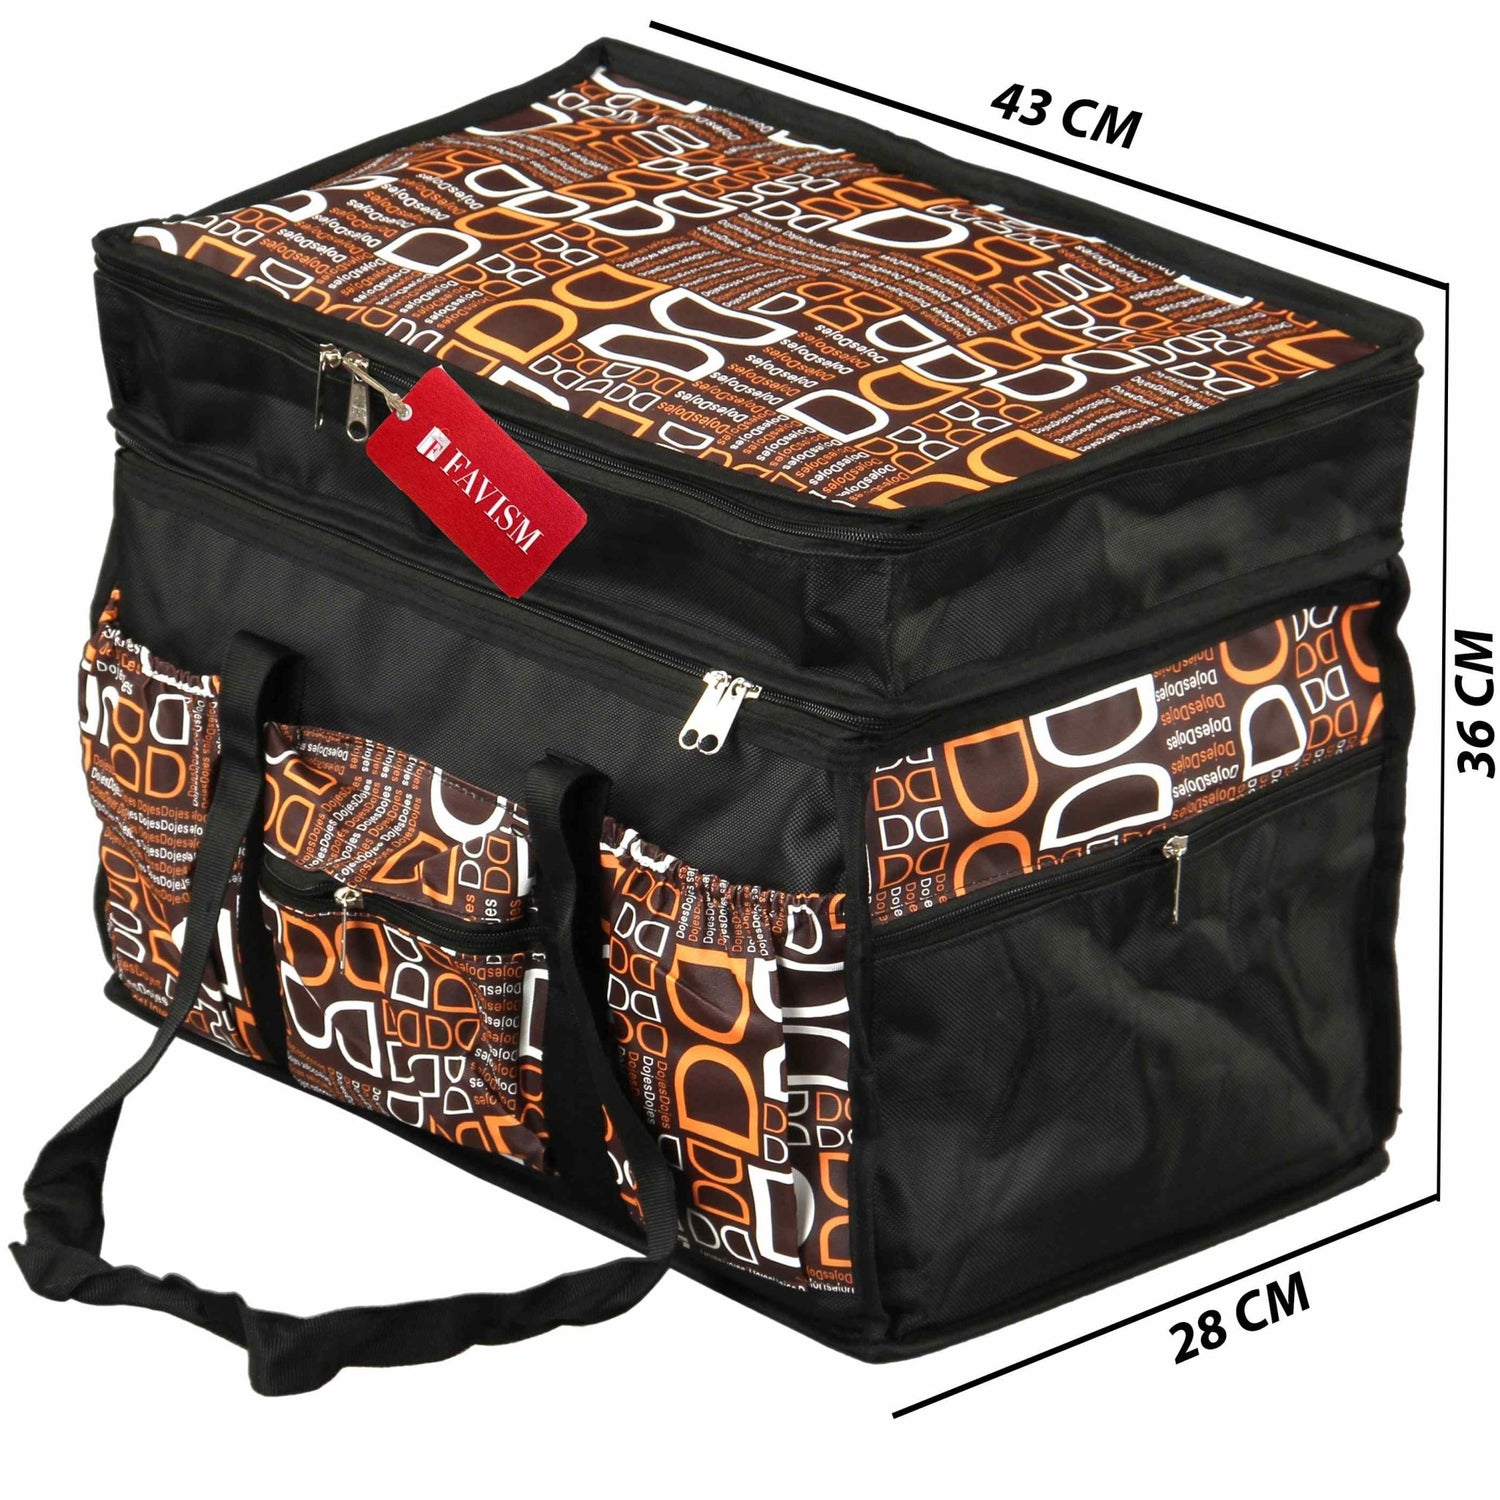 Water resistant luggage travel bag | storage bag | small traveling bag - FAVISM